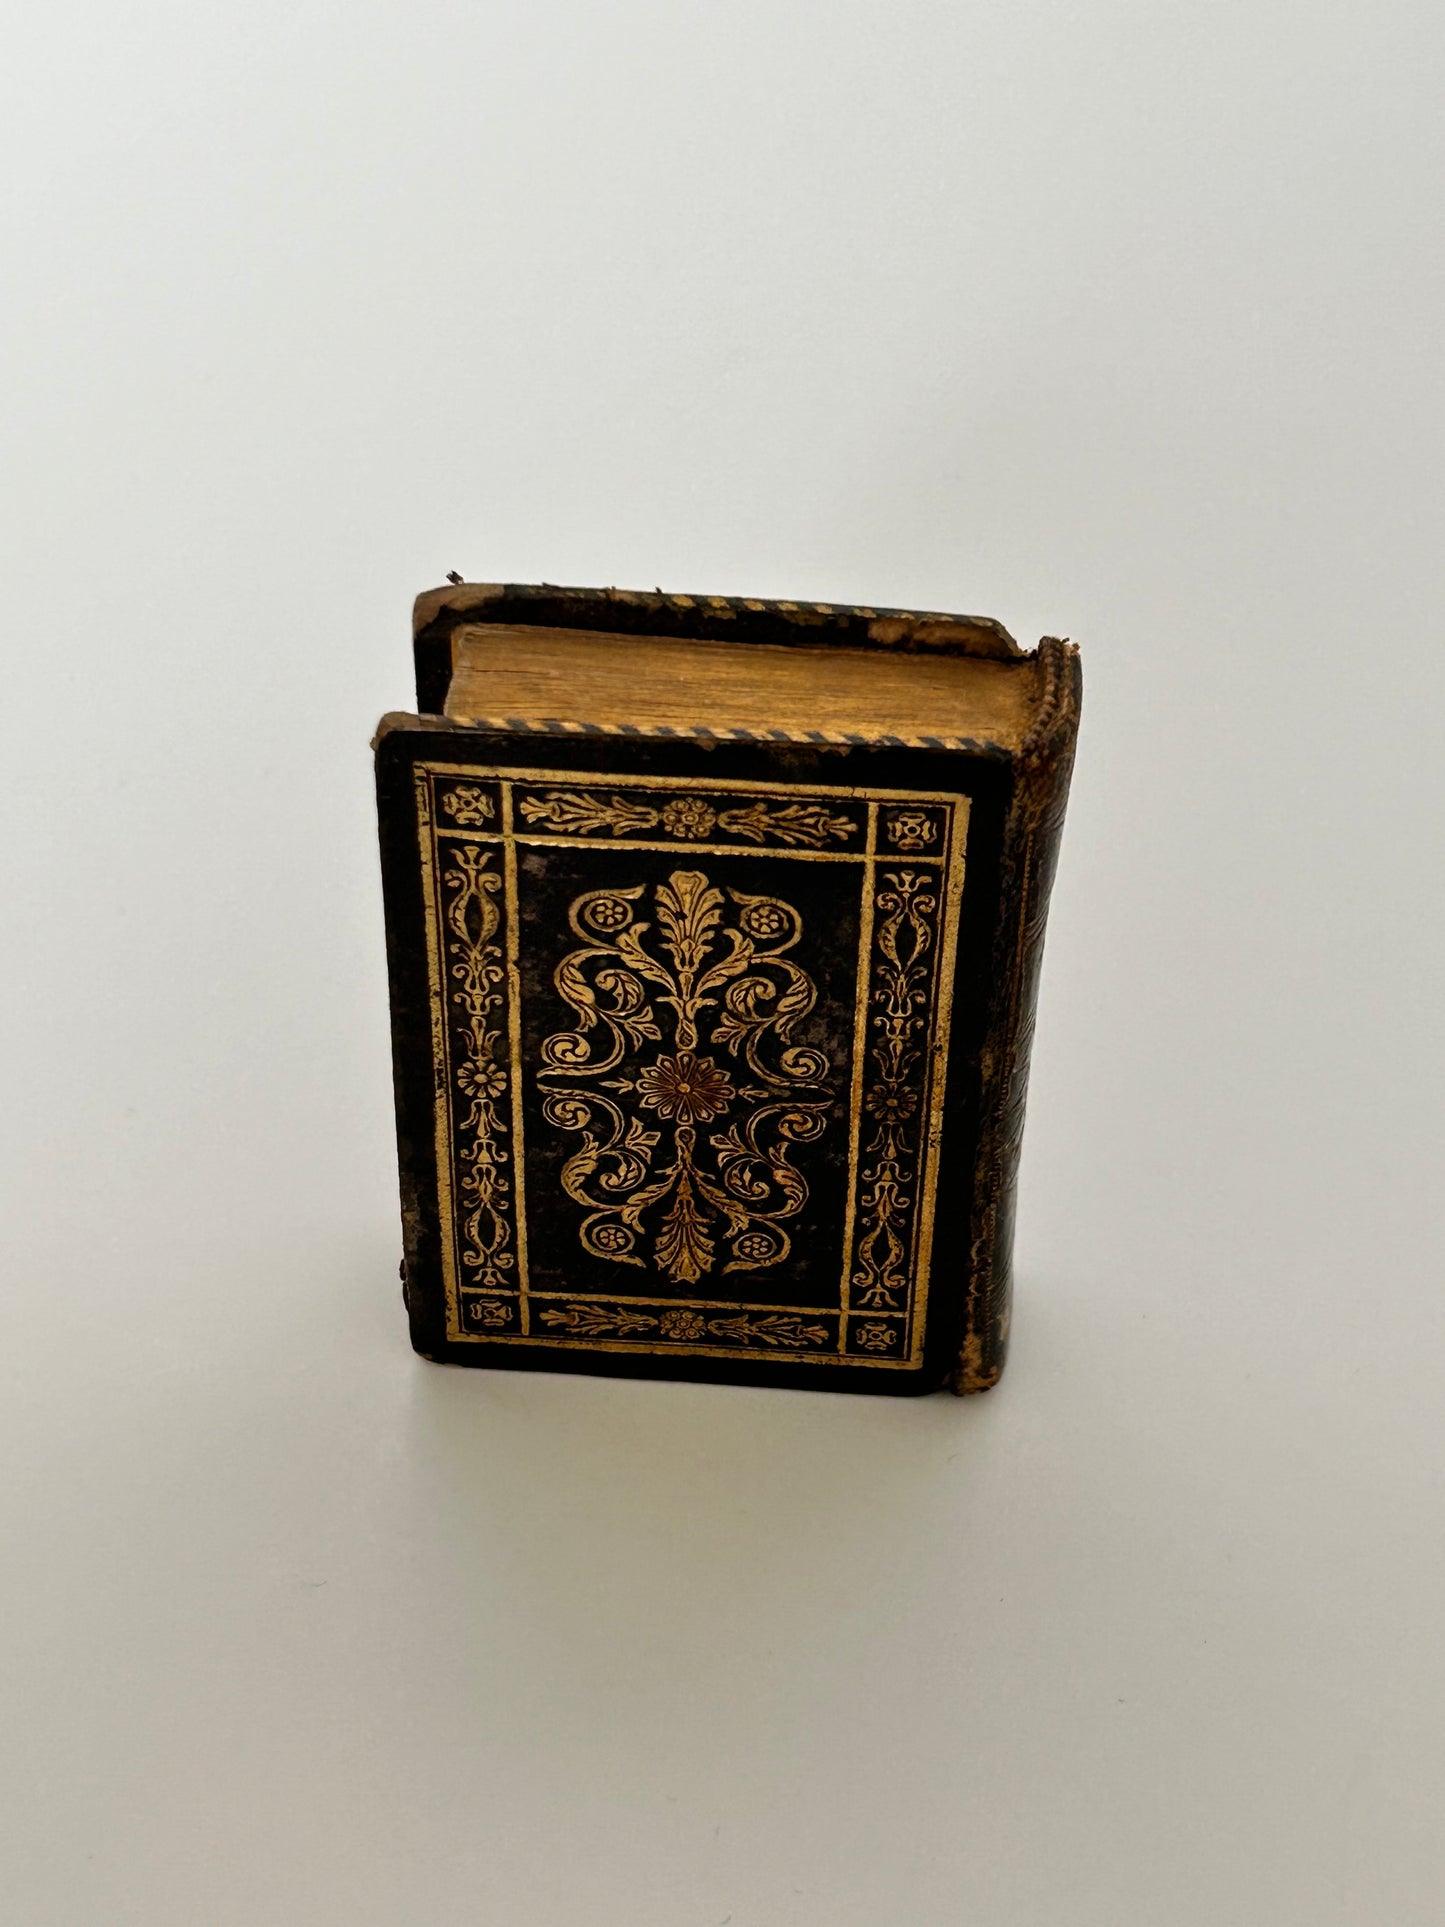 Miniature Antique Religious Book Affetti de Dio